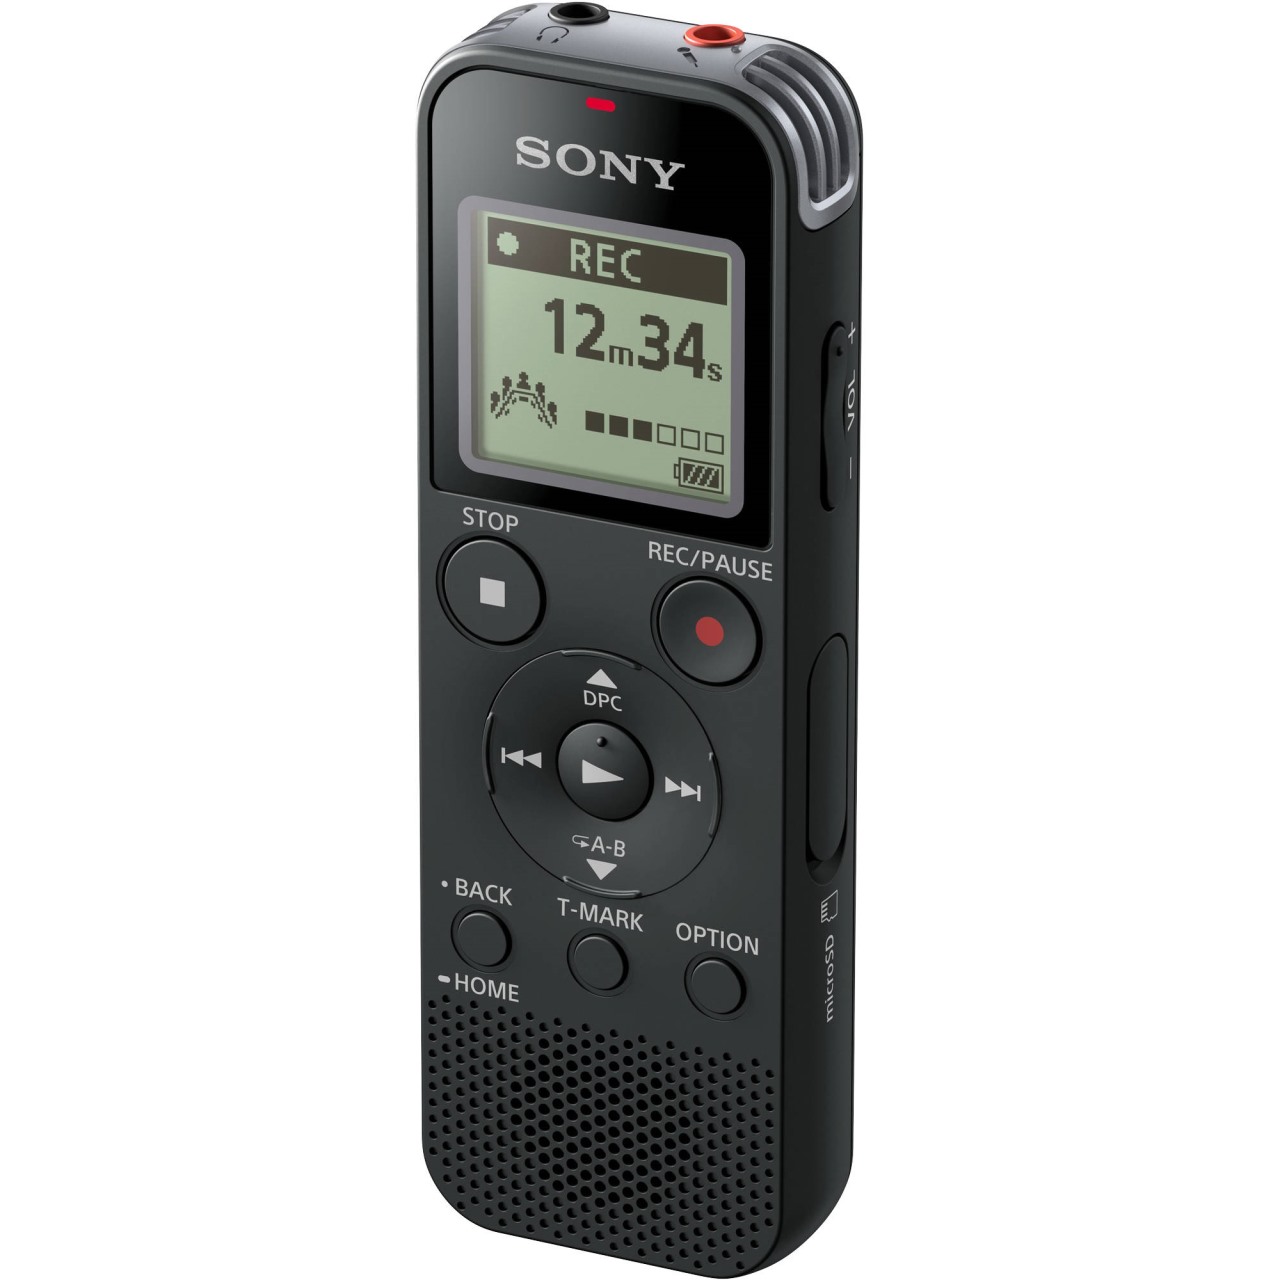 Sony ICD-PX470 Digital Recorder